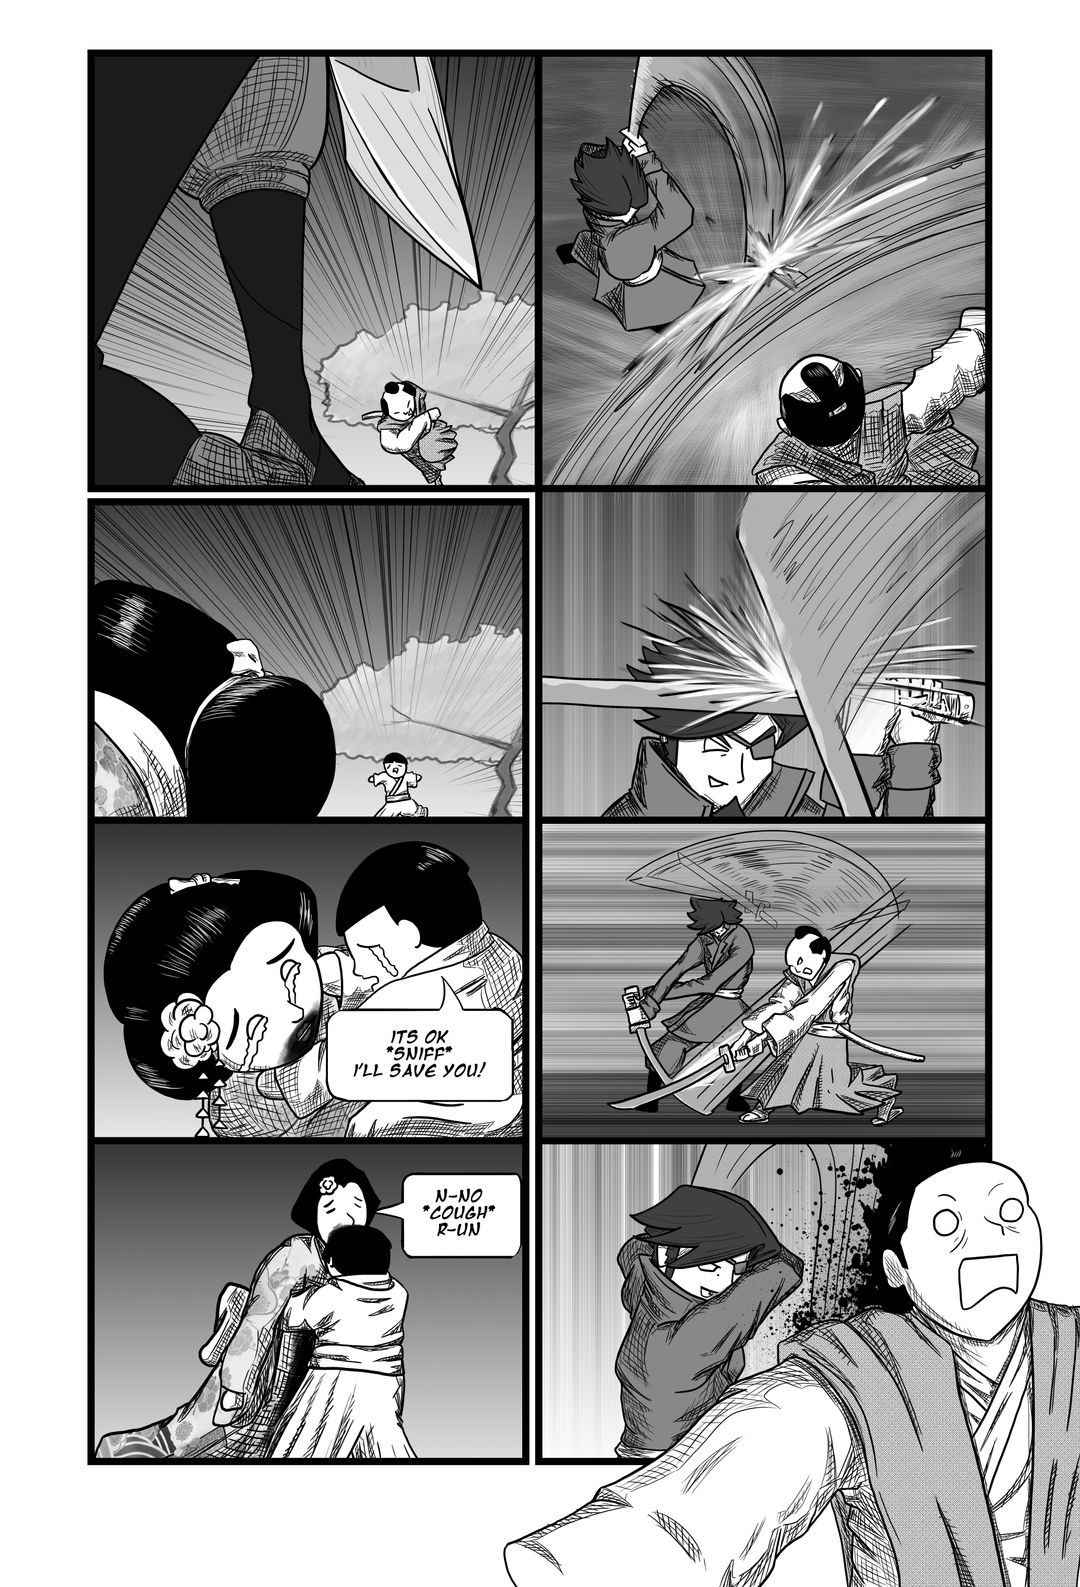 Shotgun Samurai 17 panel 6